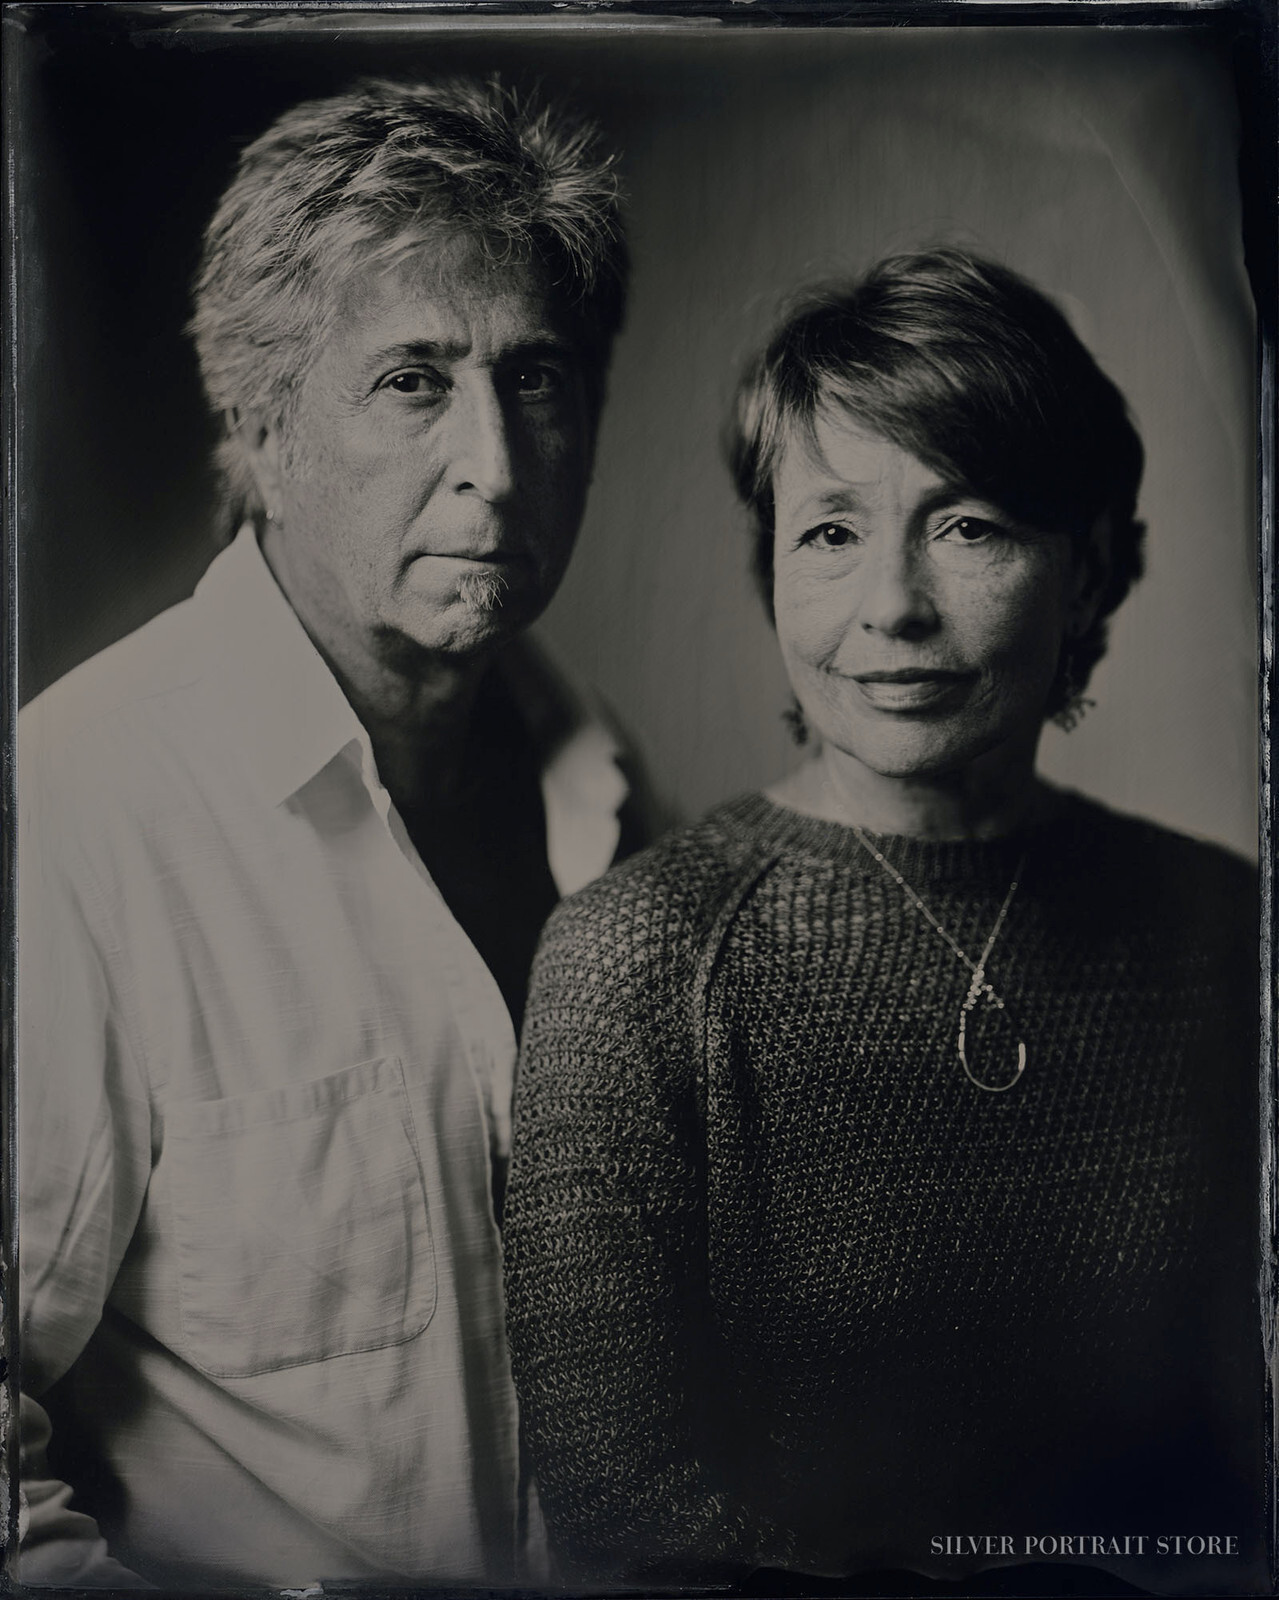 Janet & Patrick-Silver Portrait Store-Wet plate collodion-Tintype 20 x 25cm.